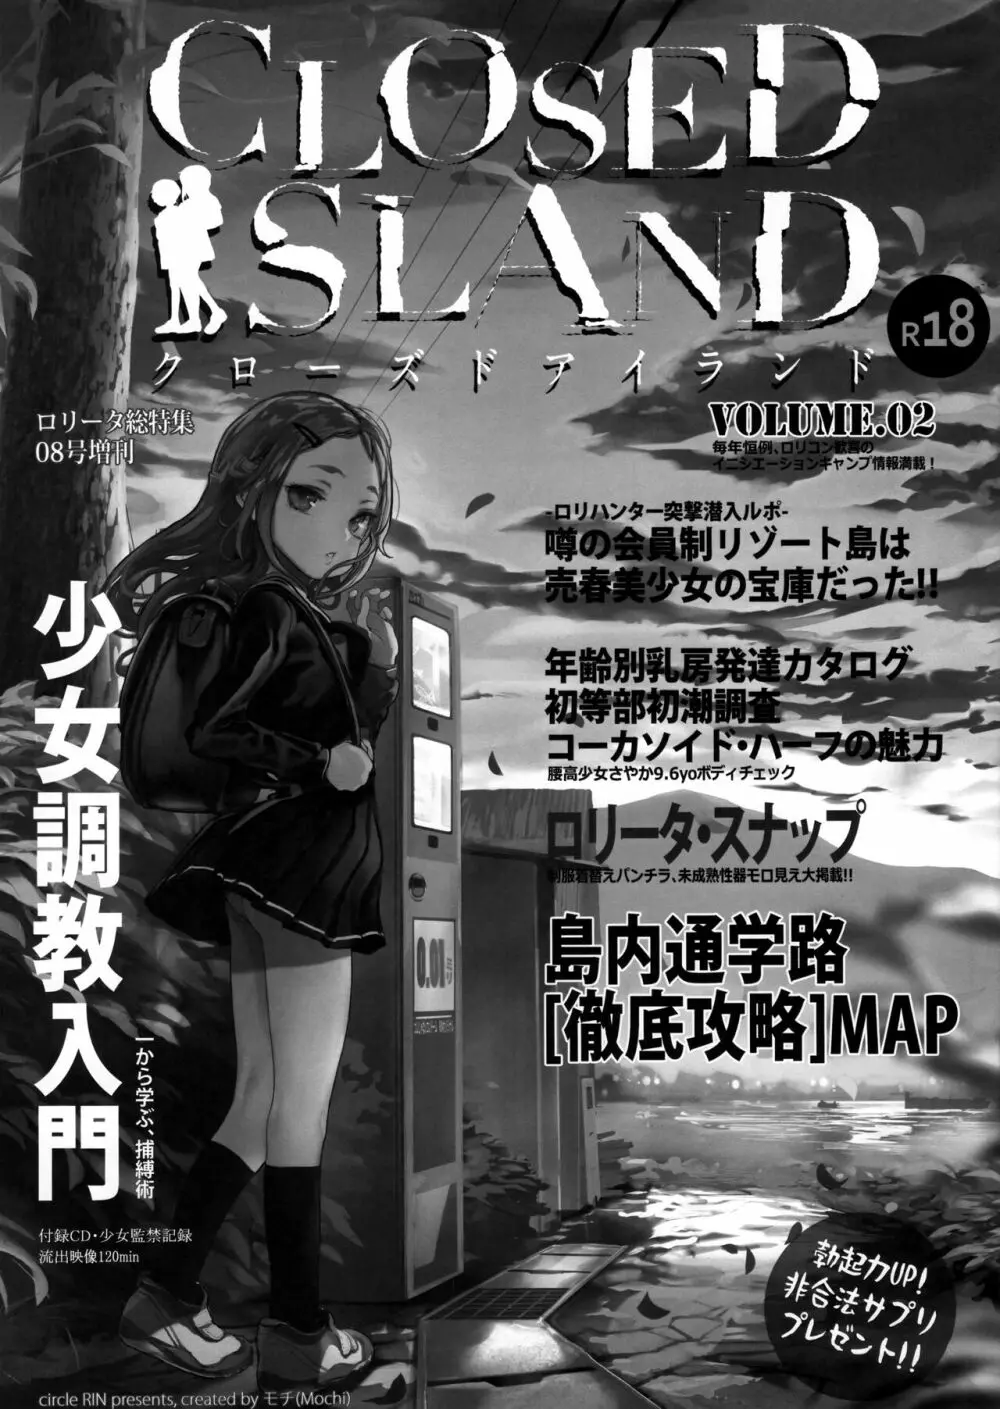 CLOSED ISLAND Volume.2 Page.1